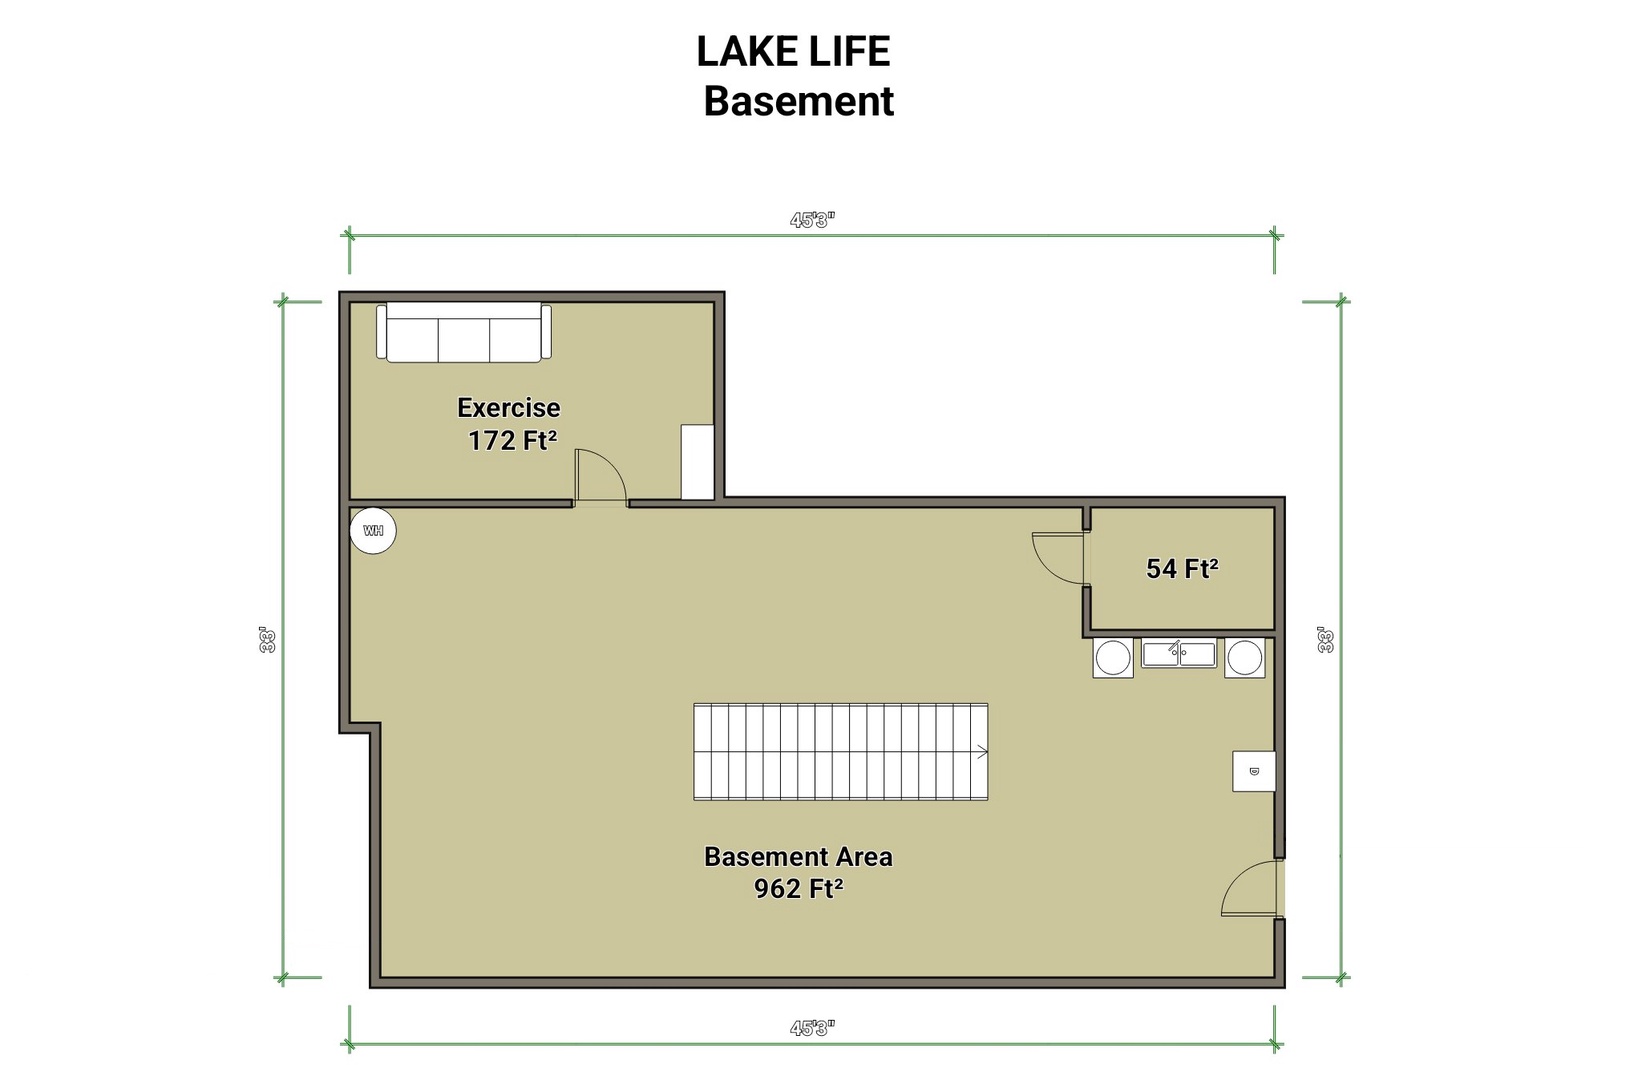 Lake Life Basement Floorplan